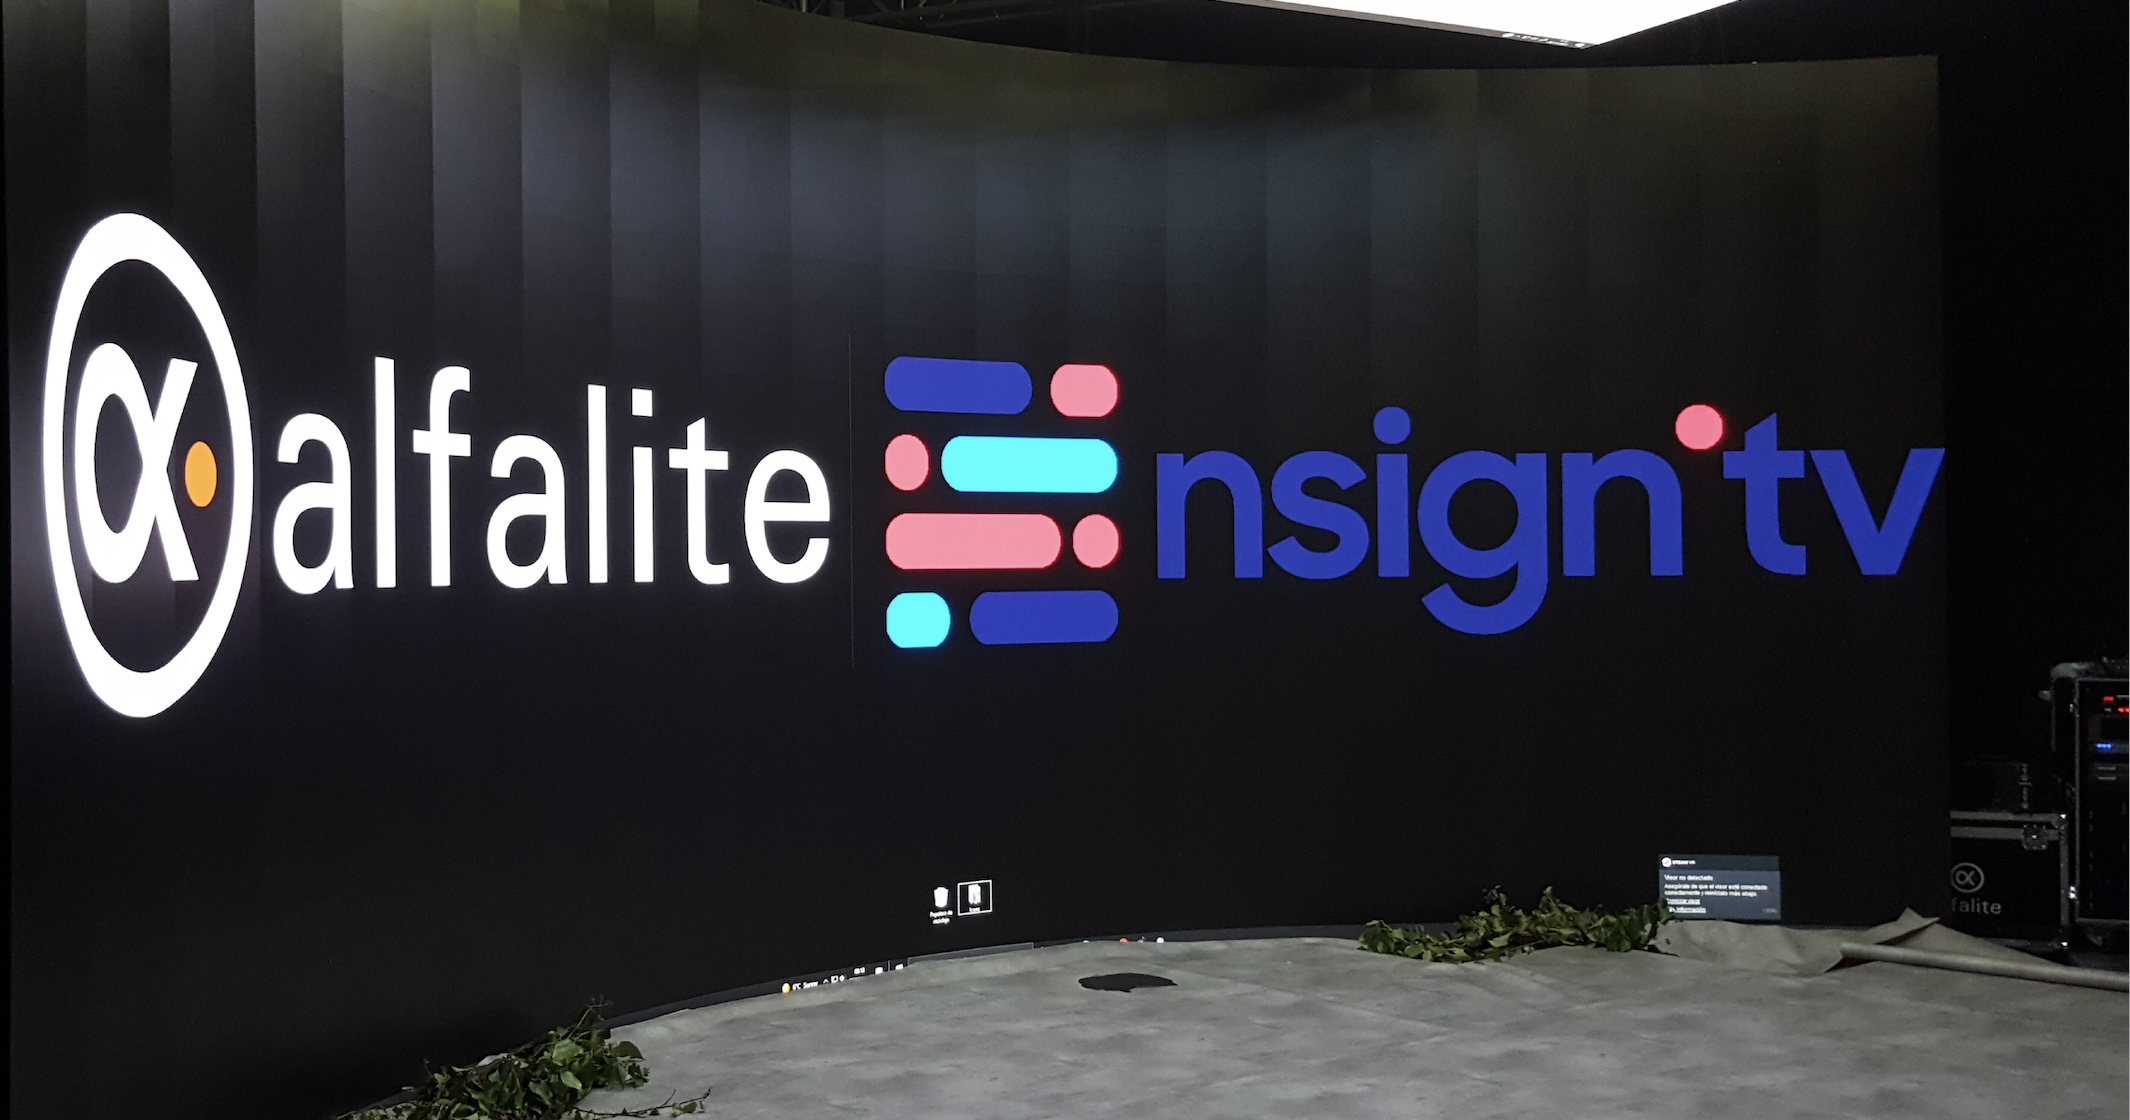 nsign.tv integrates its digital signage platform into Alfalite's LED screens